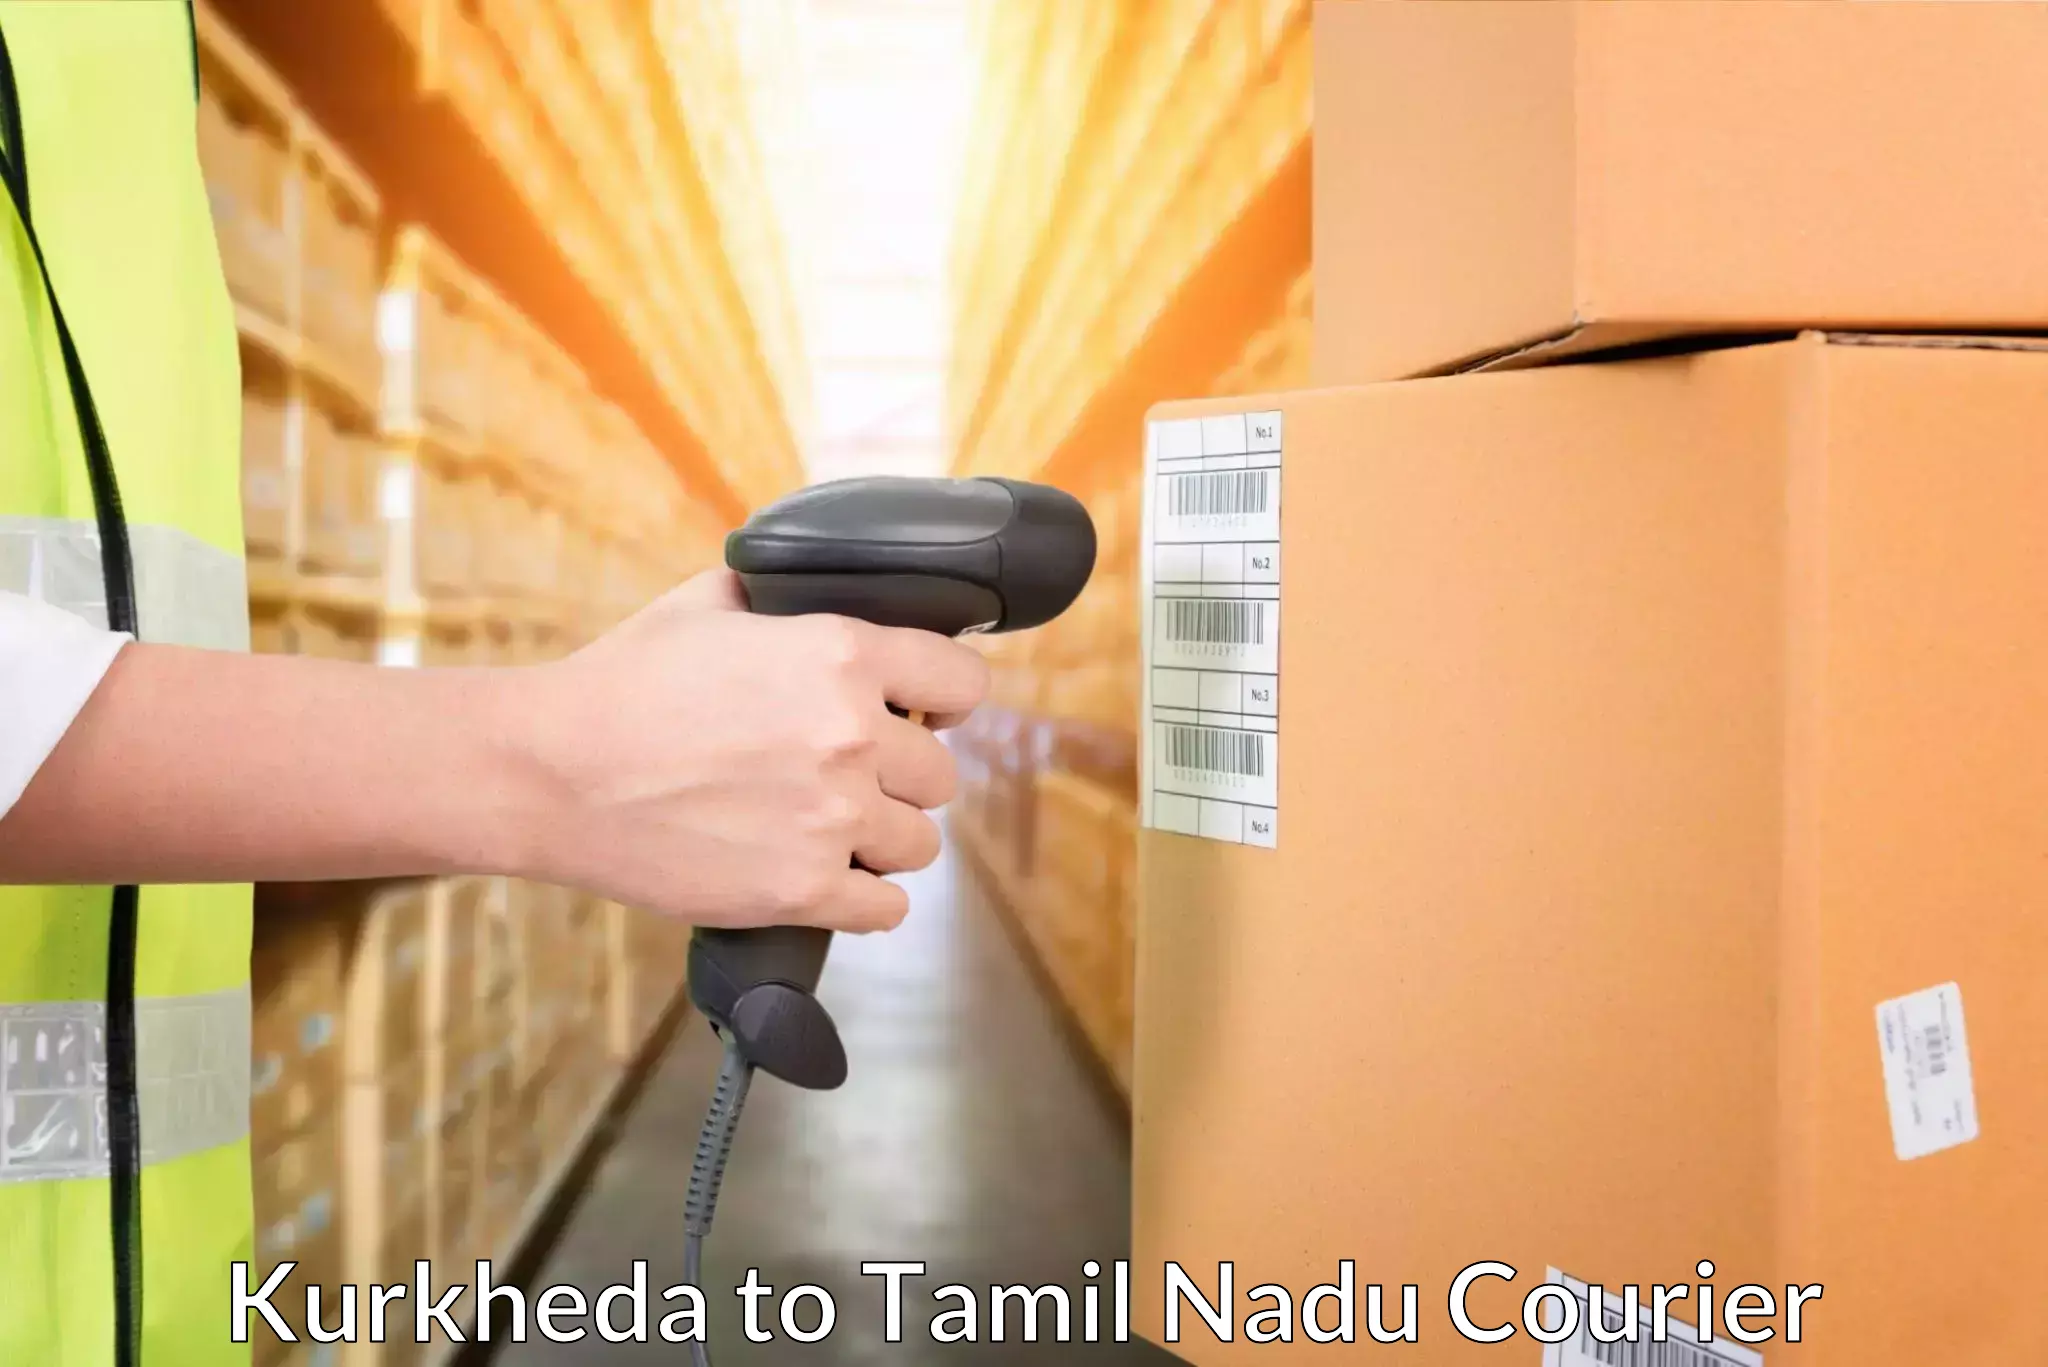 Courier service comparison Kurkheda to Thiruthuraipoondi